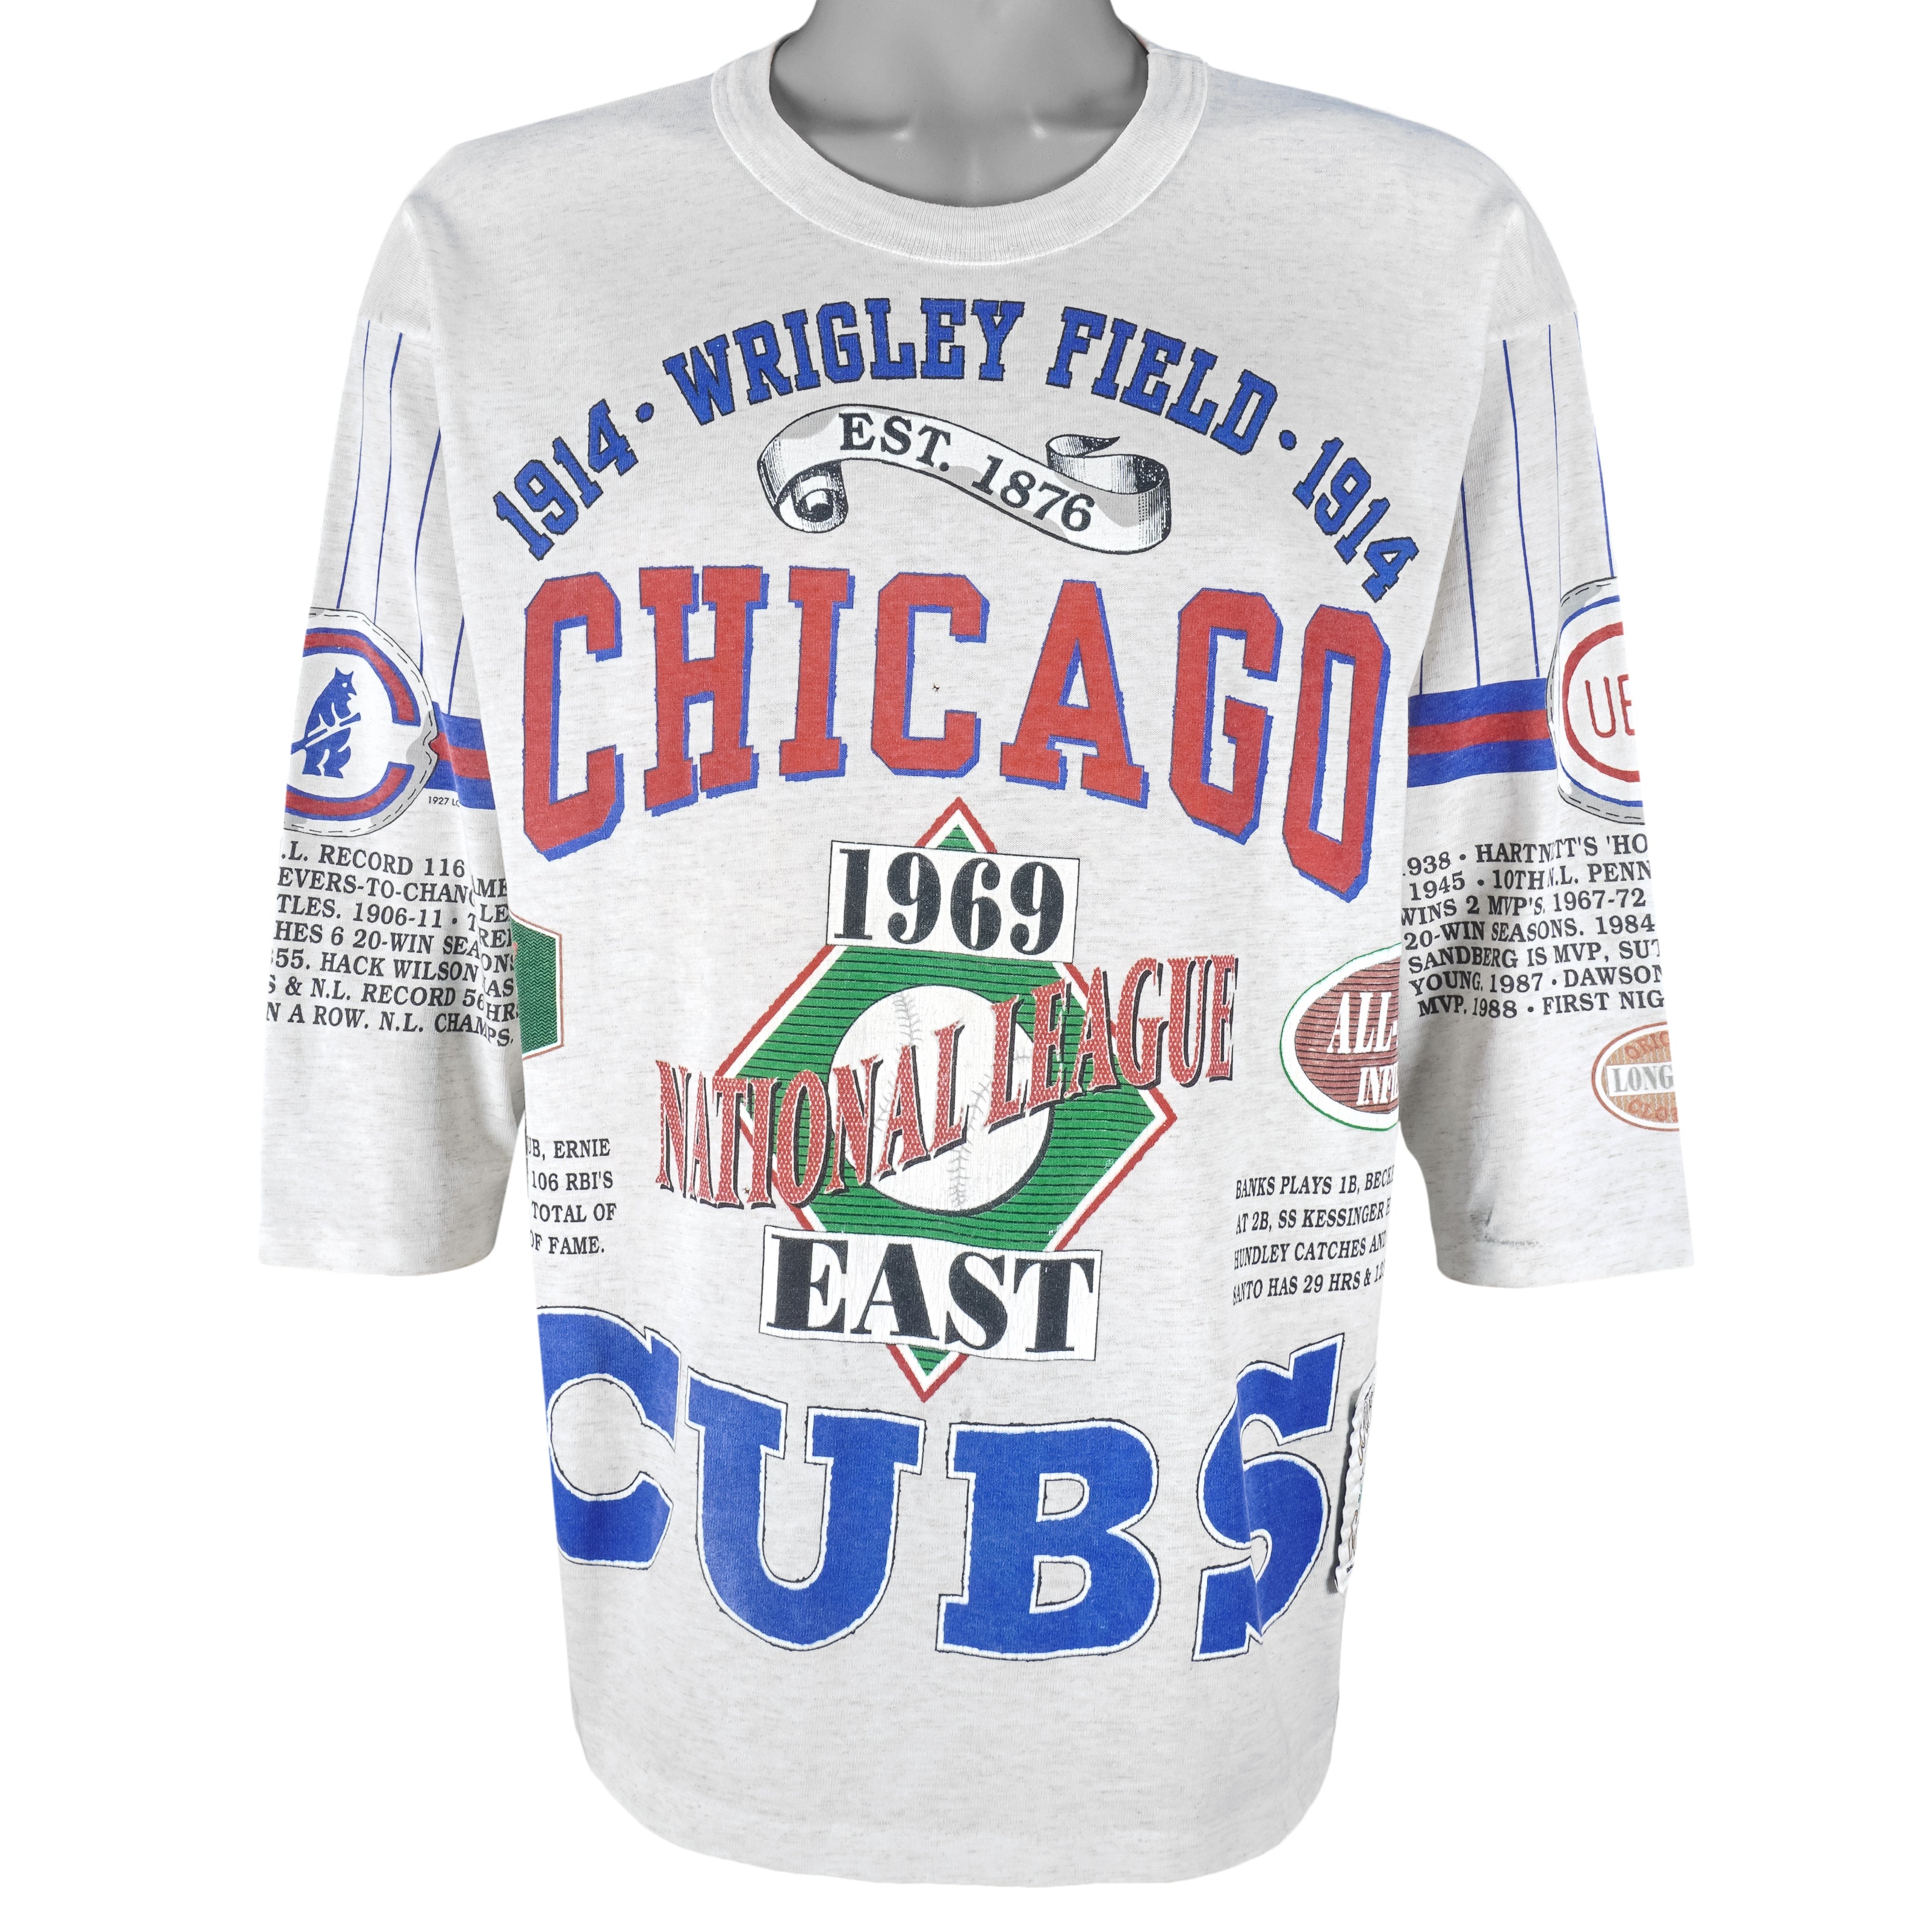 VTG 90's Chicago Cubs Shirt - Men's L Large MLB Baseball